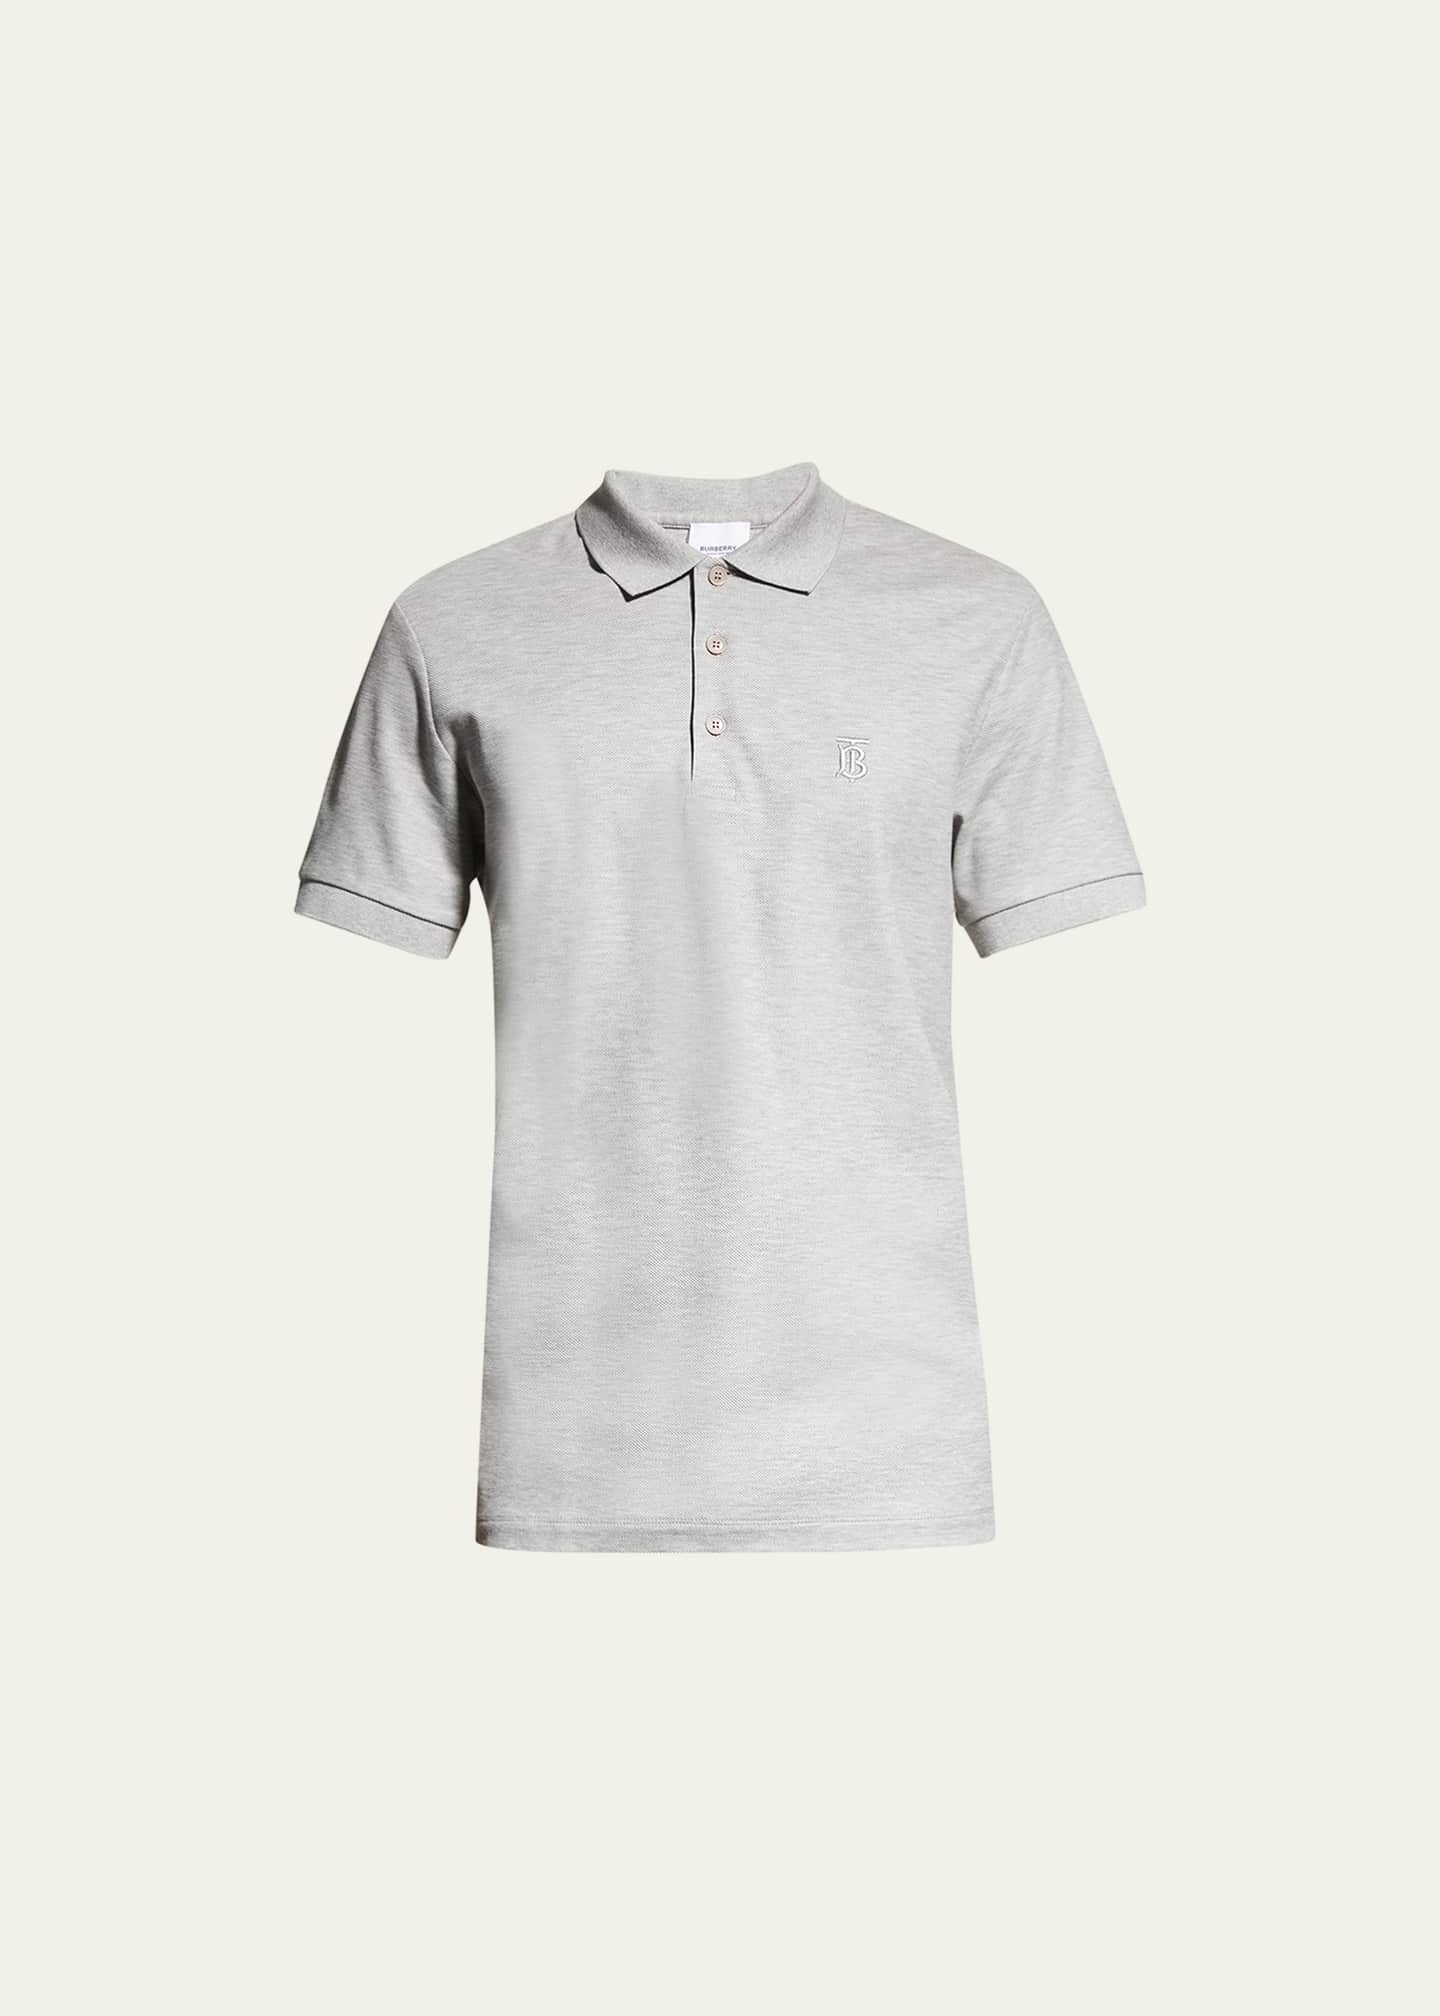 Burberry Men's Eddie Pique Polo Shirt, Gray - Bergdorf Goodman